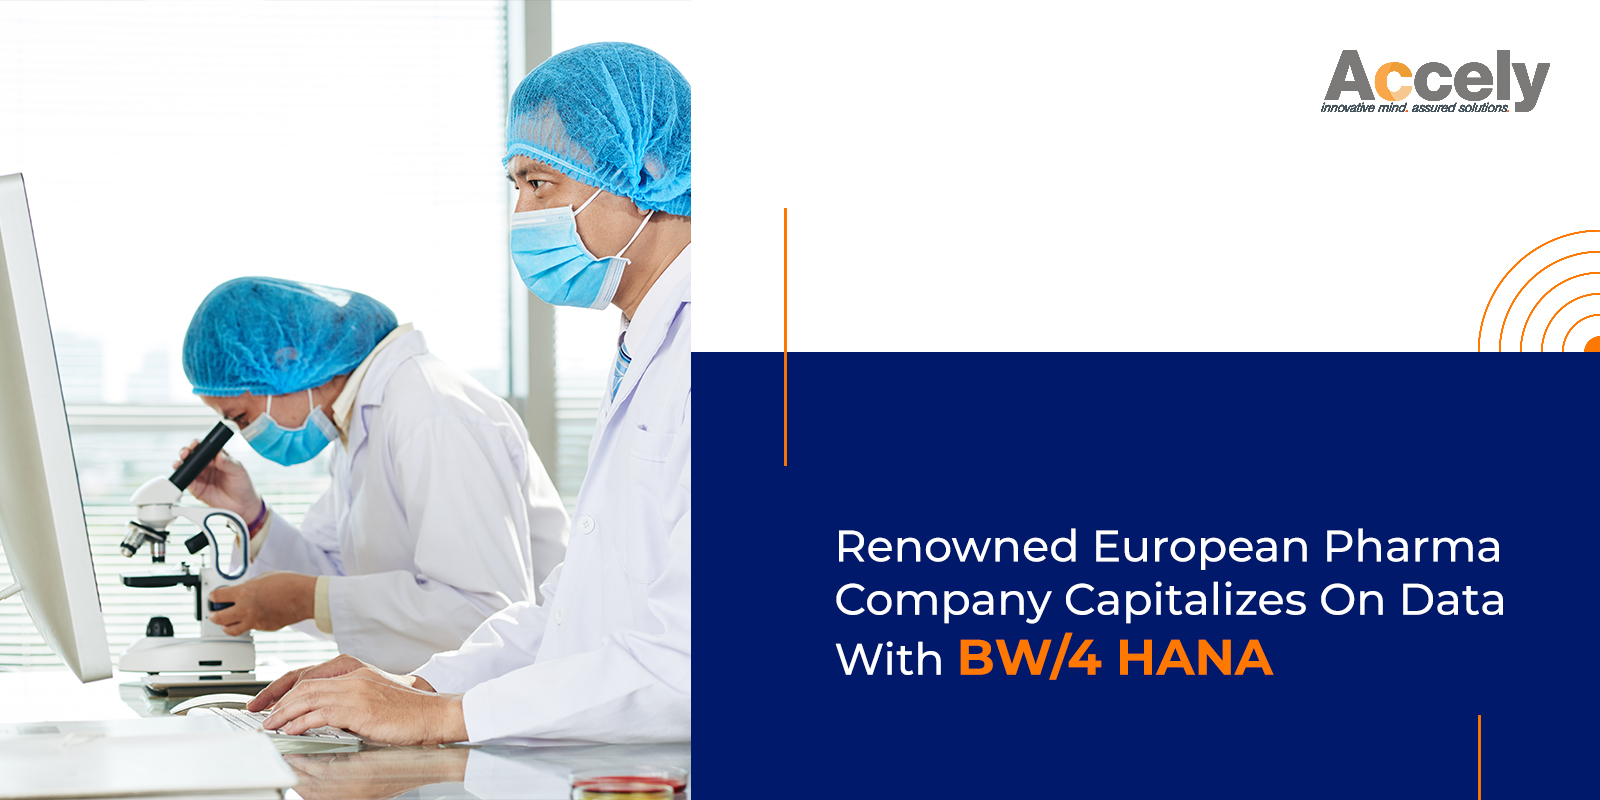 Renowned European Pharma Company Capitalizes On Data With BW/4 HANA